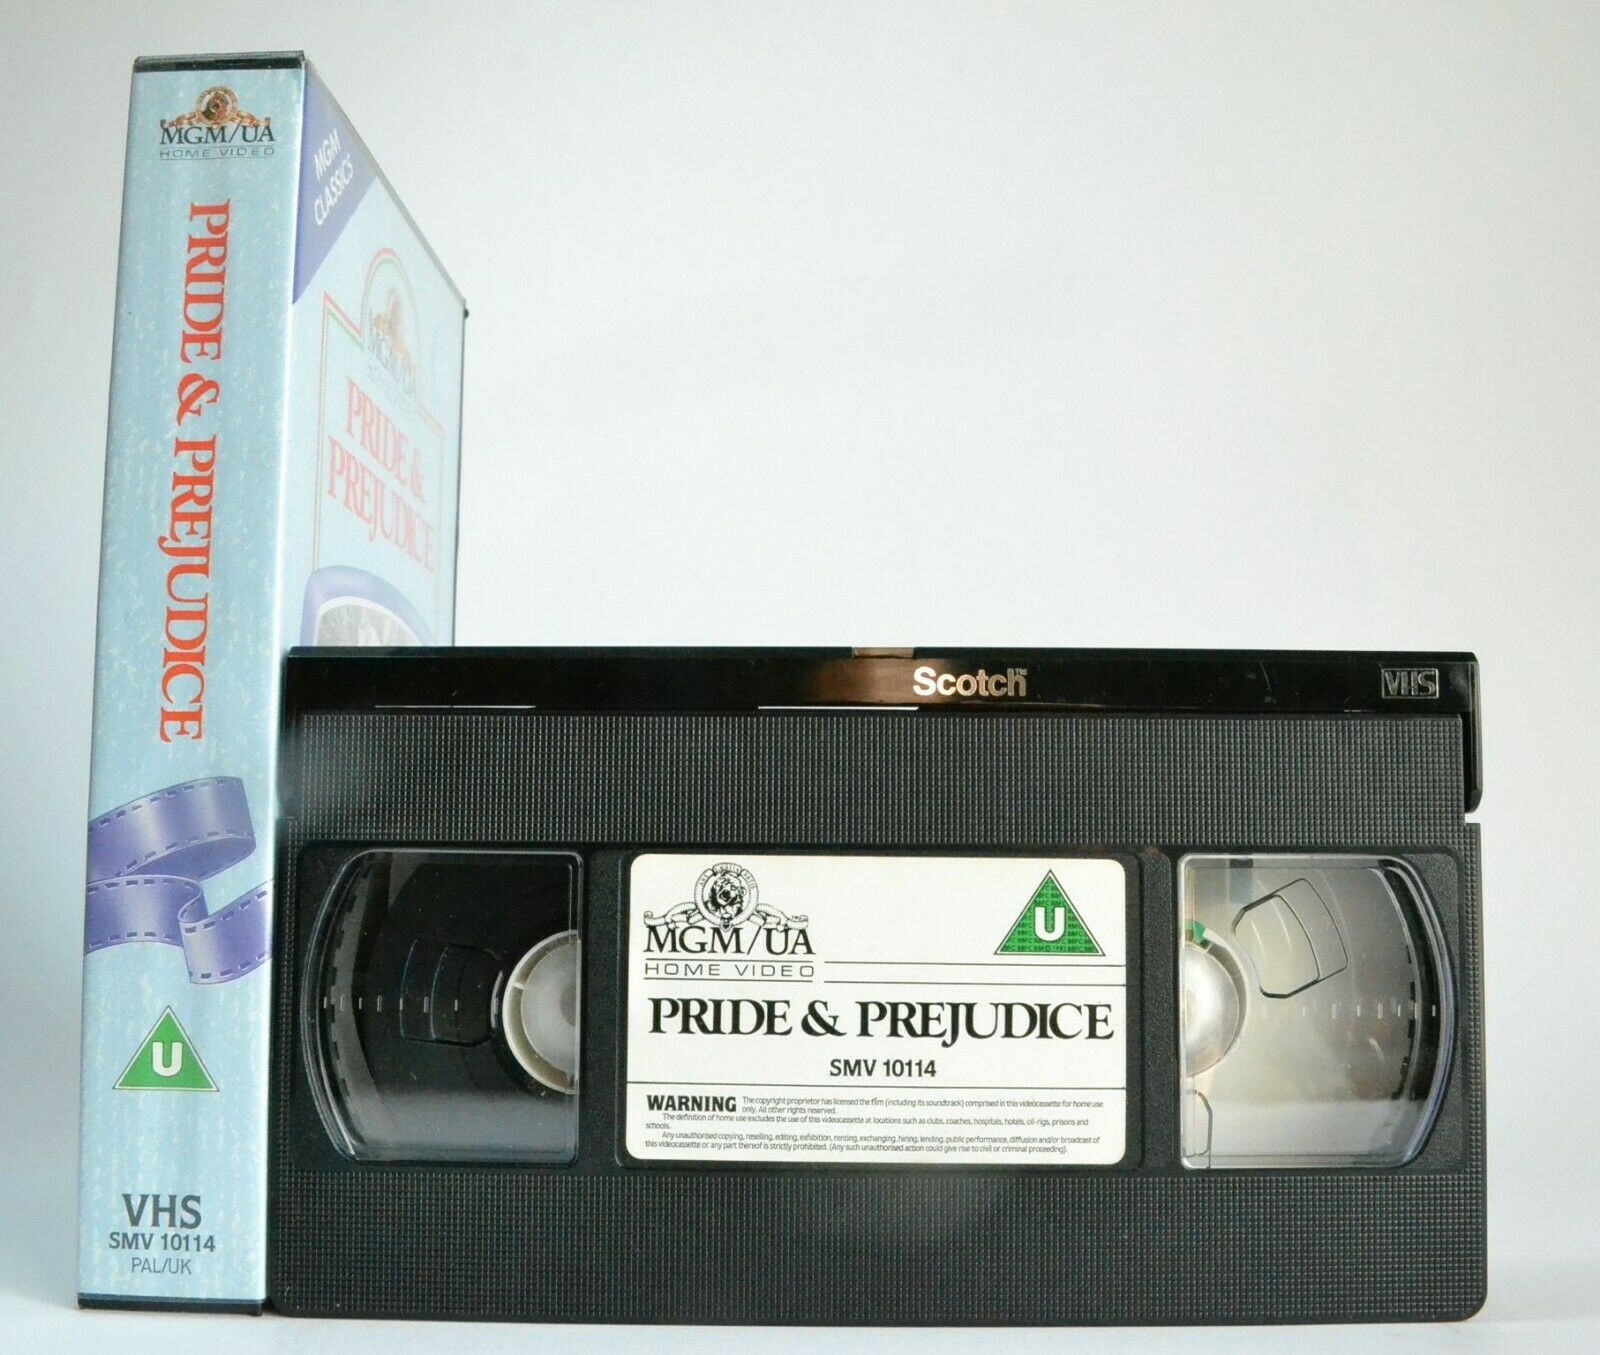 Pride And Prejudice [MGM Classics] Jane Austen - Comedy - Greer Garson - Pal VHS-